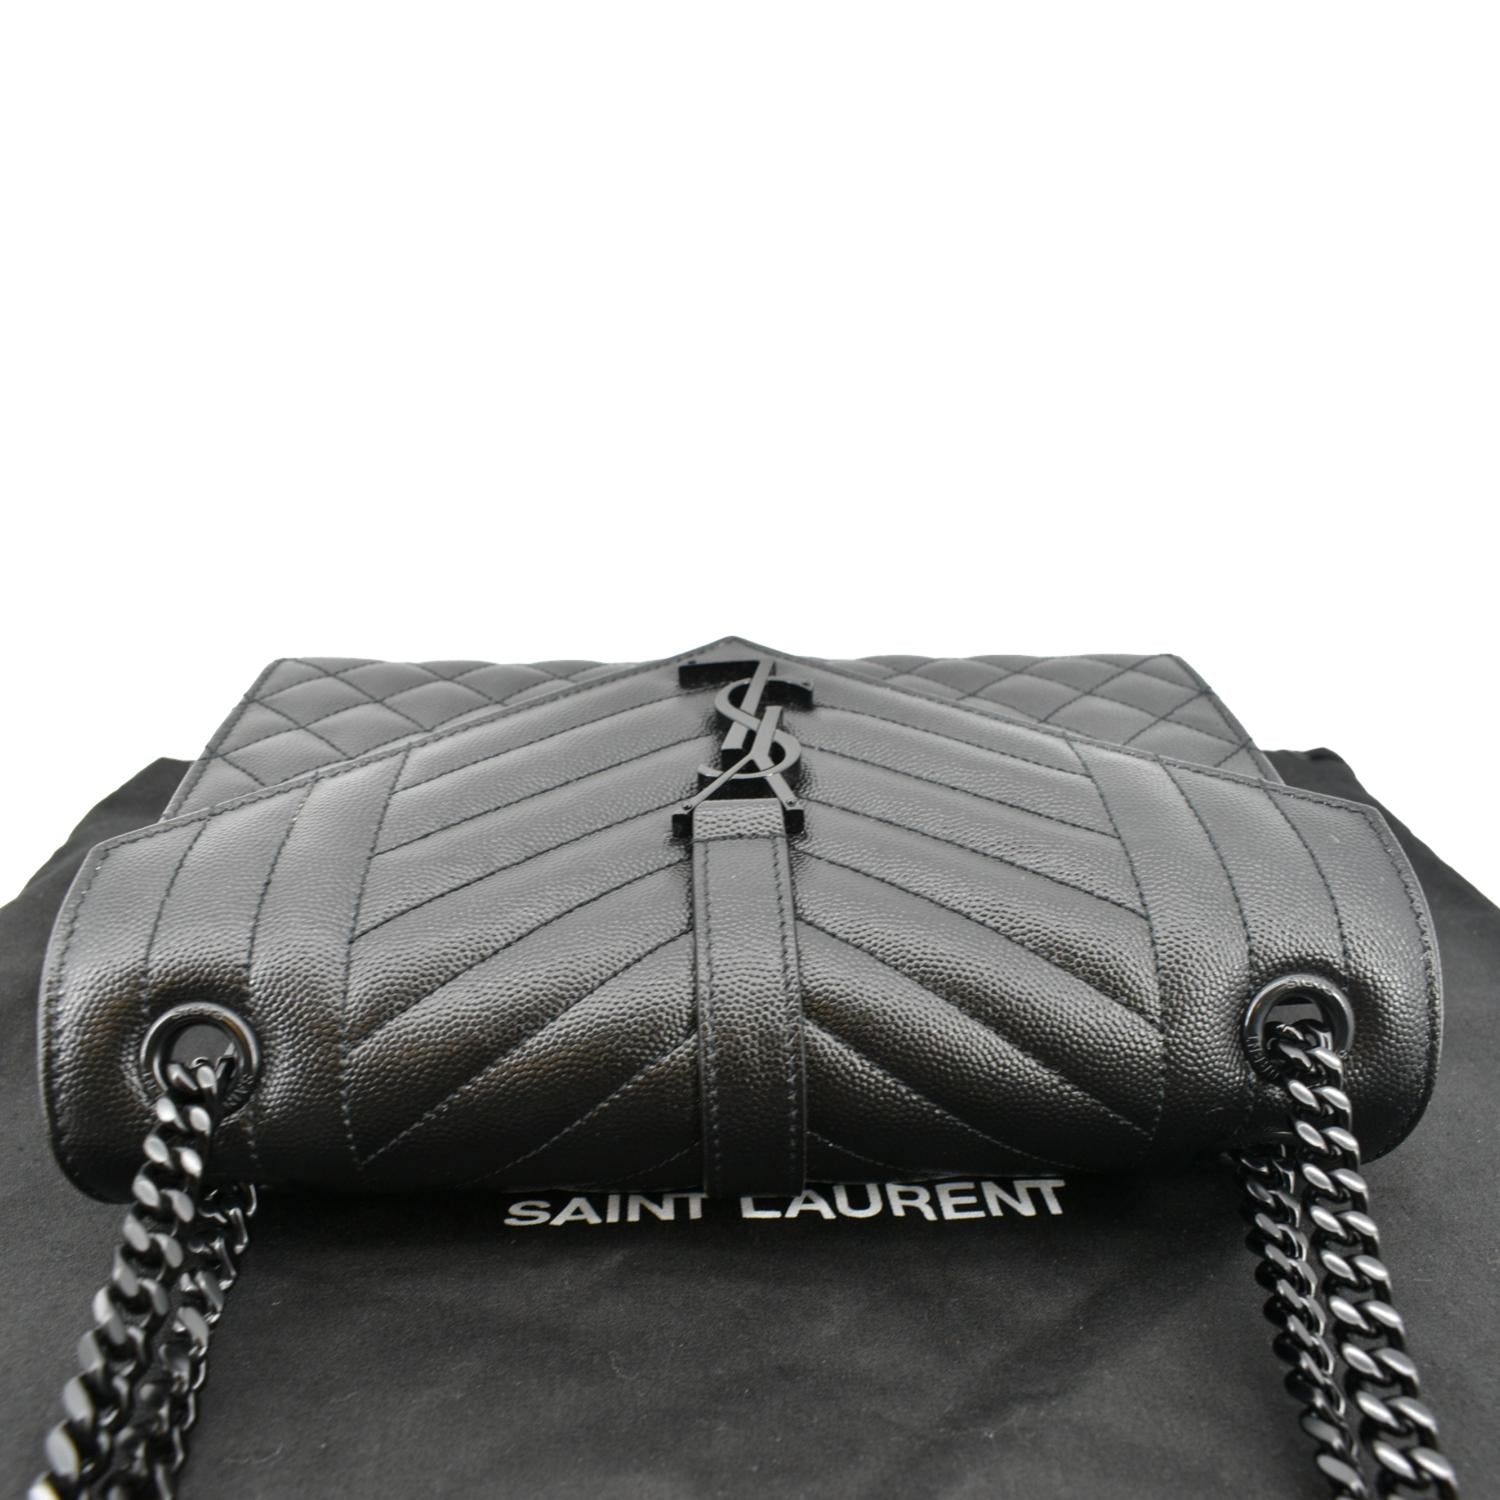 Ysl Saint Laurent college chain shoulder bag black silver